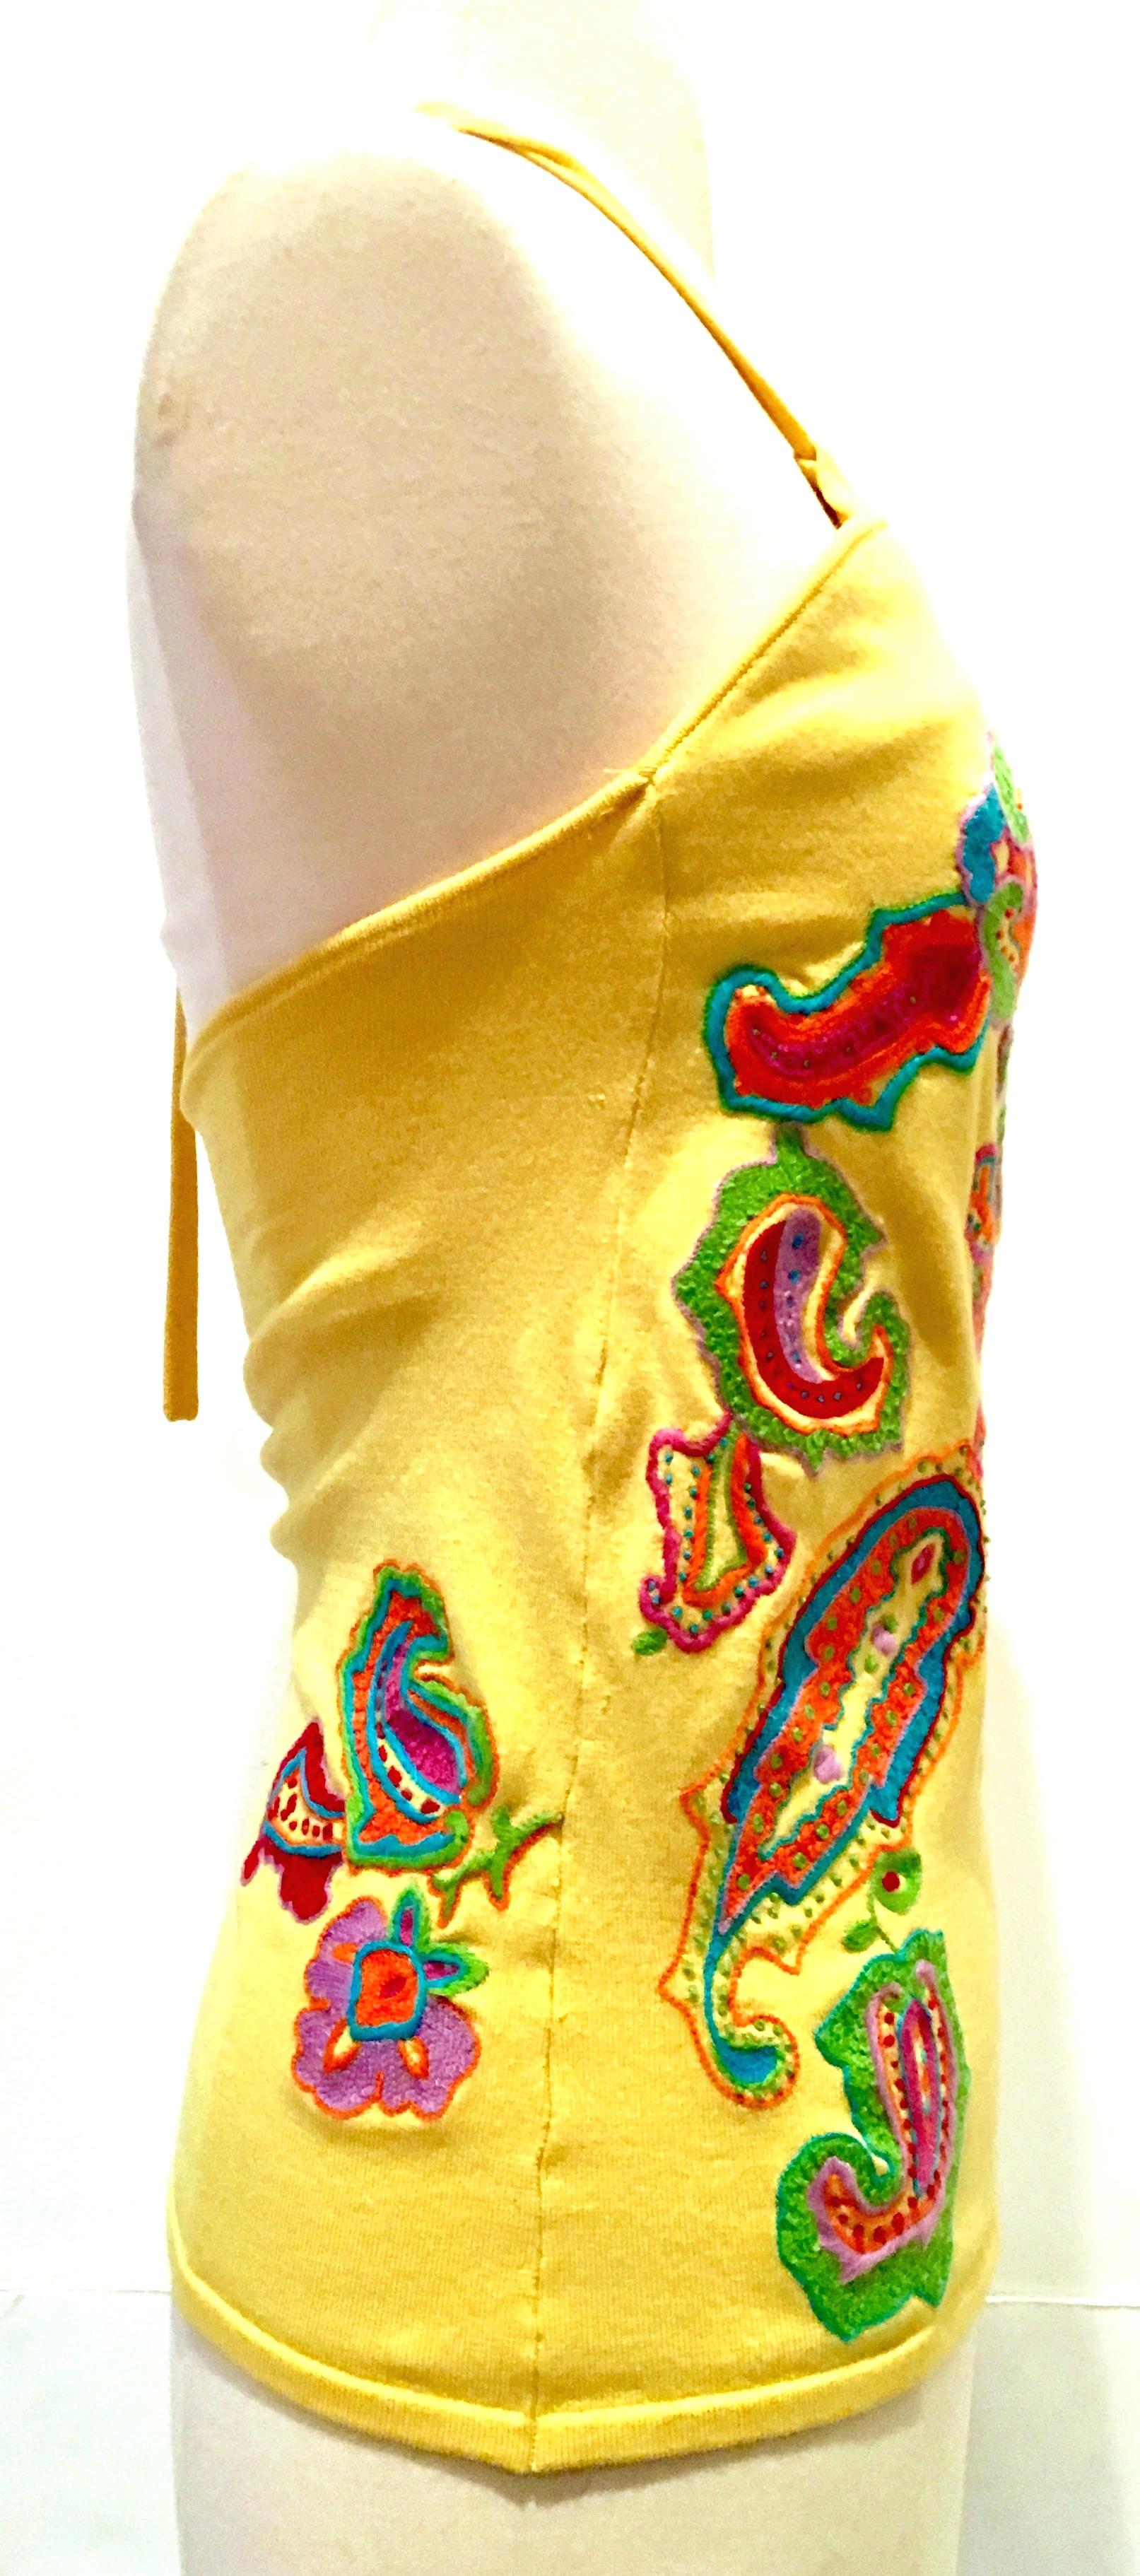 21st Century Silk Embroidered Halter Top By, Ralph Lauren In Excellent Condition For Sale In West Palm Beach, FL